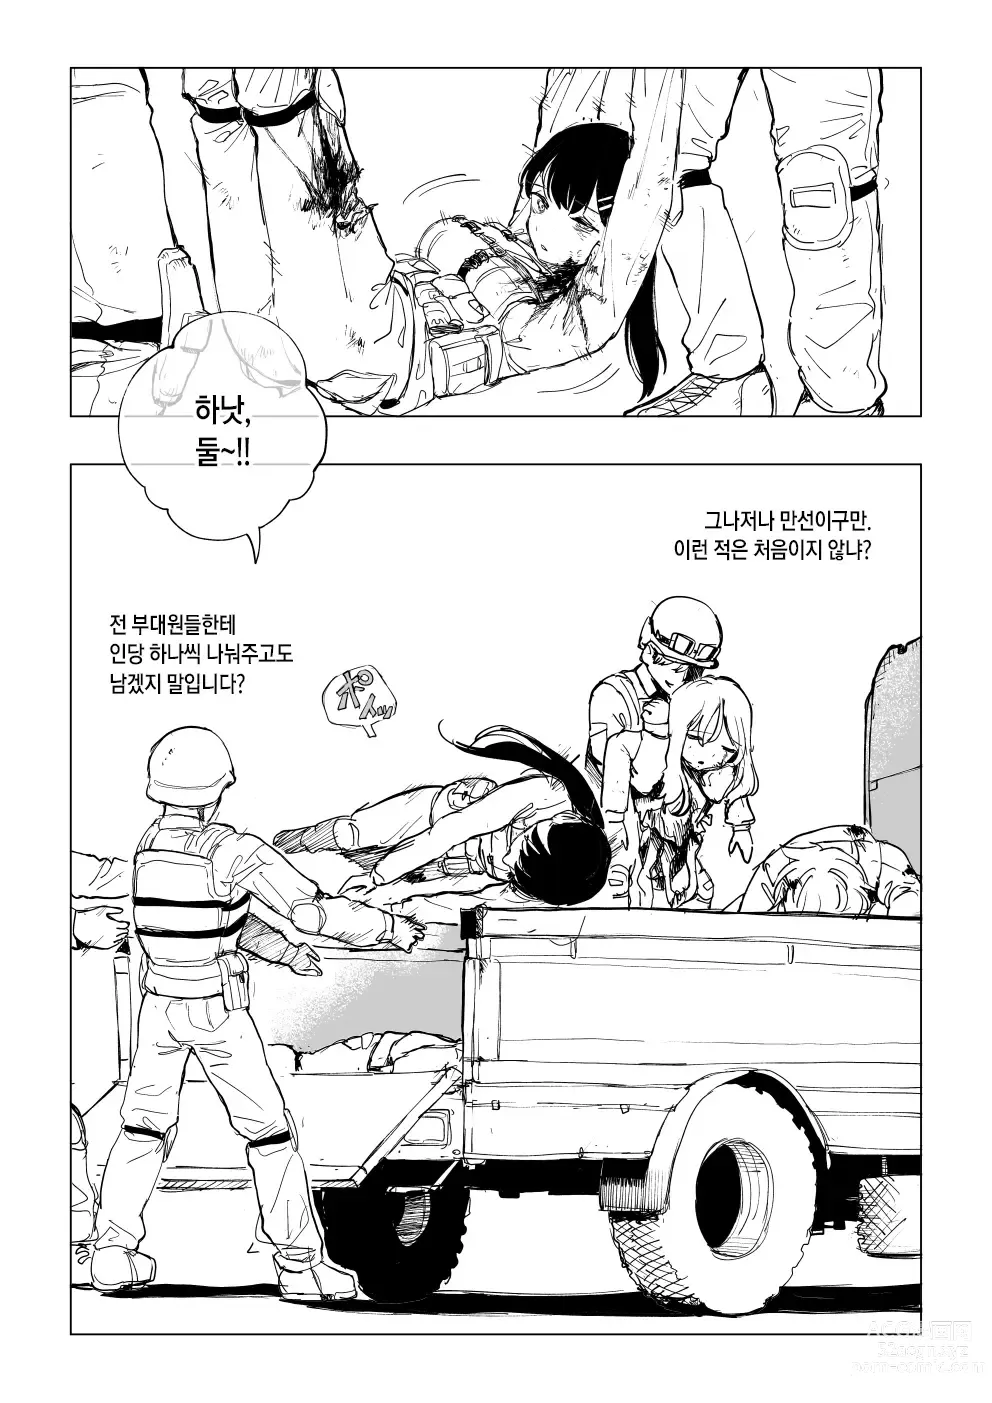 Page 2 of doujinshi 전장에 지다 <전투 후>